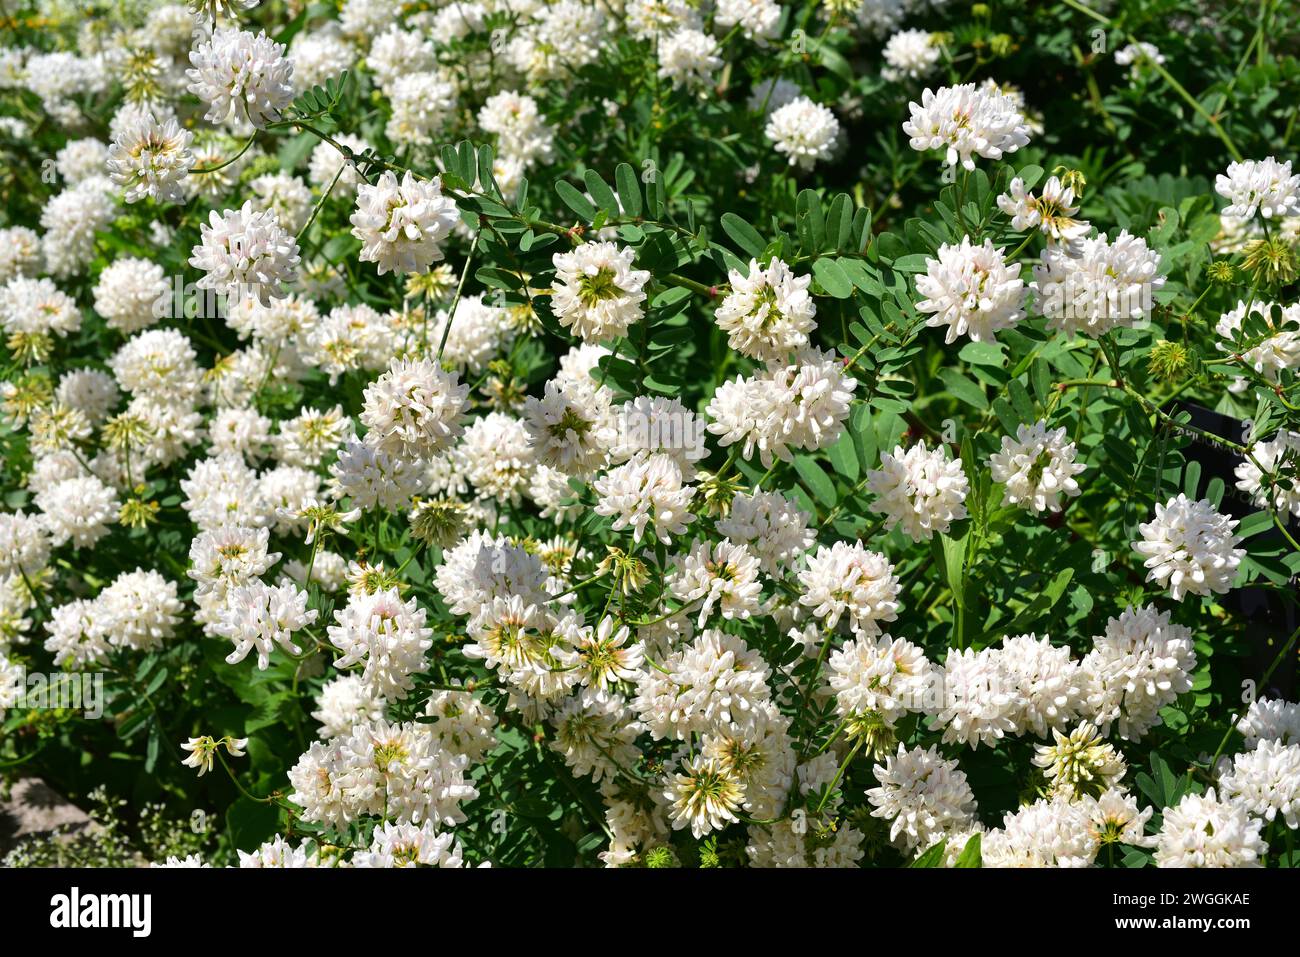 White crownvetch (Coronilla globosa or Securigera globosa) is a perennial shrub native to Crete. Flowering plant. Stock Photo